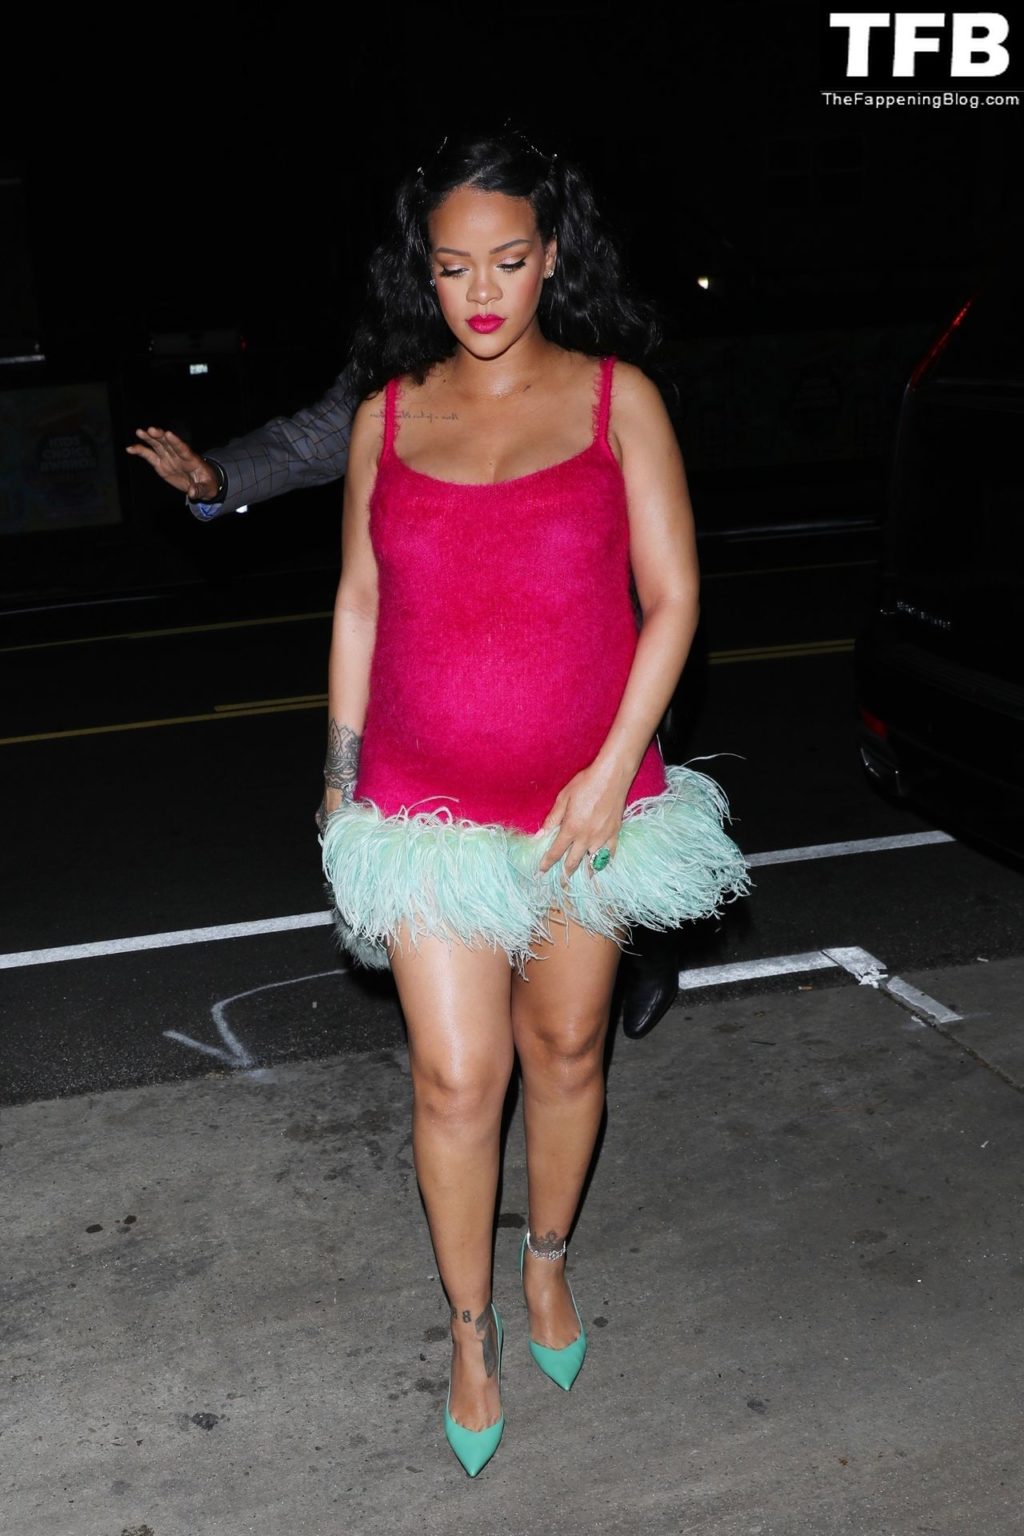 Rihanna Sexy The Fappening Blog 59 1024x1536 - Rihanna Puts Her Baby Bump on Display Grabbing Dinner at Giorgio Baldi (100 Photos)